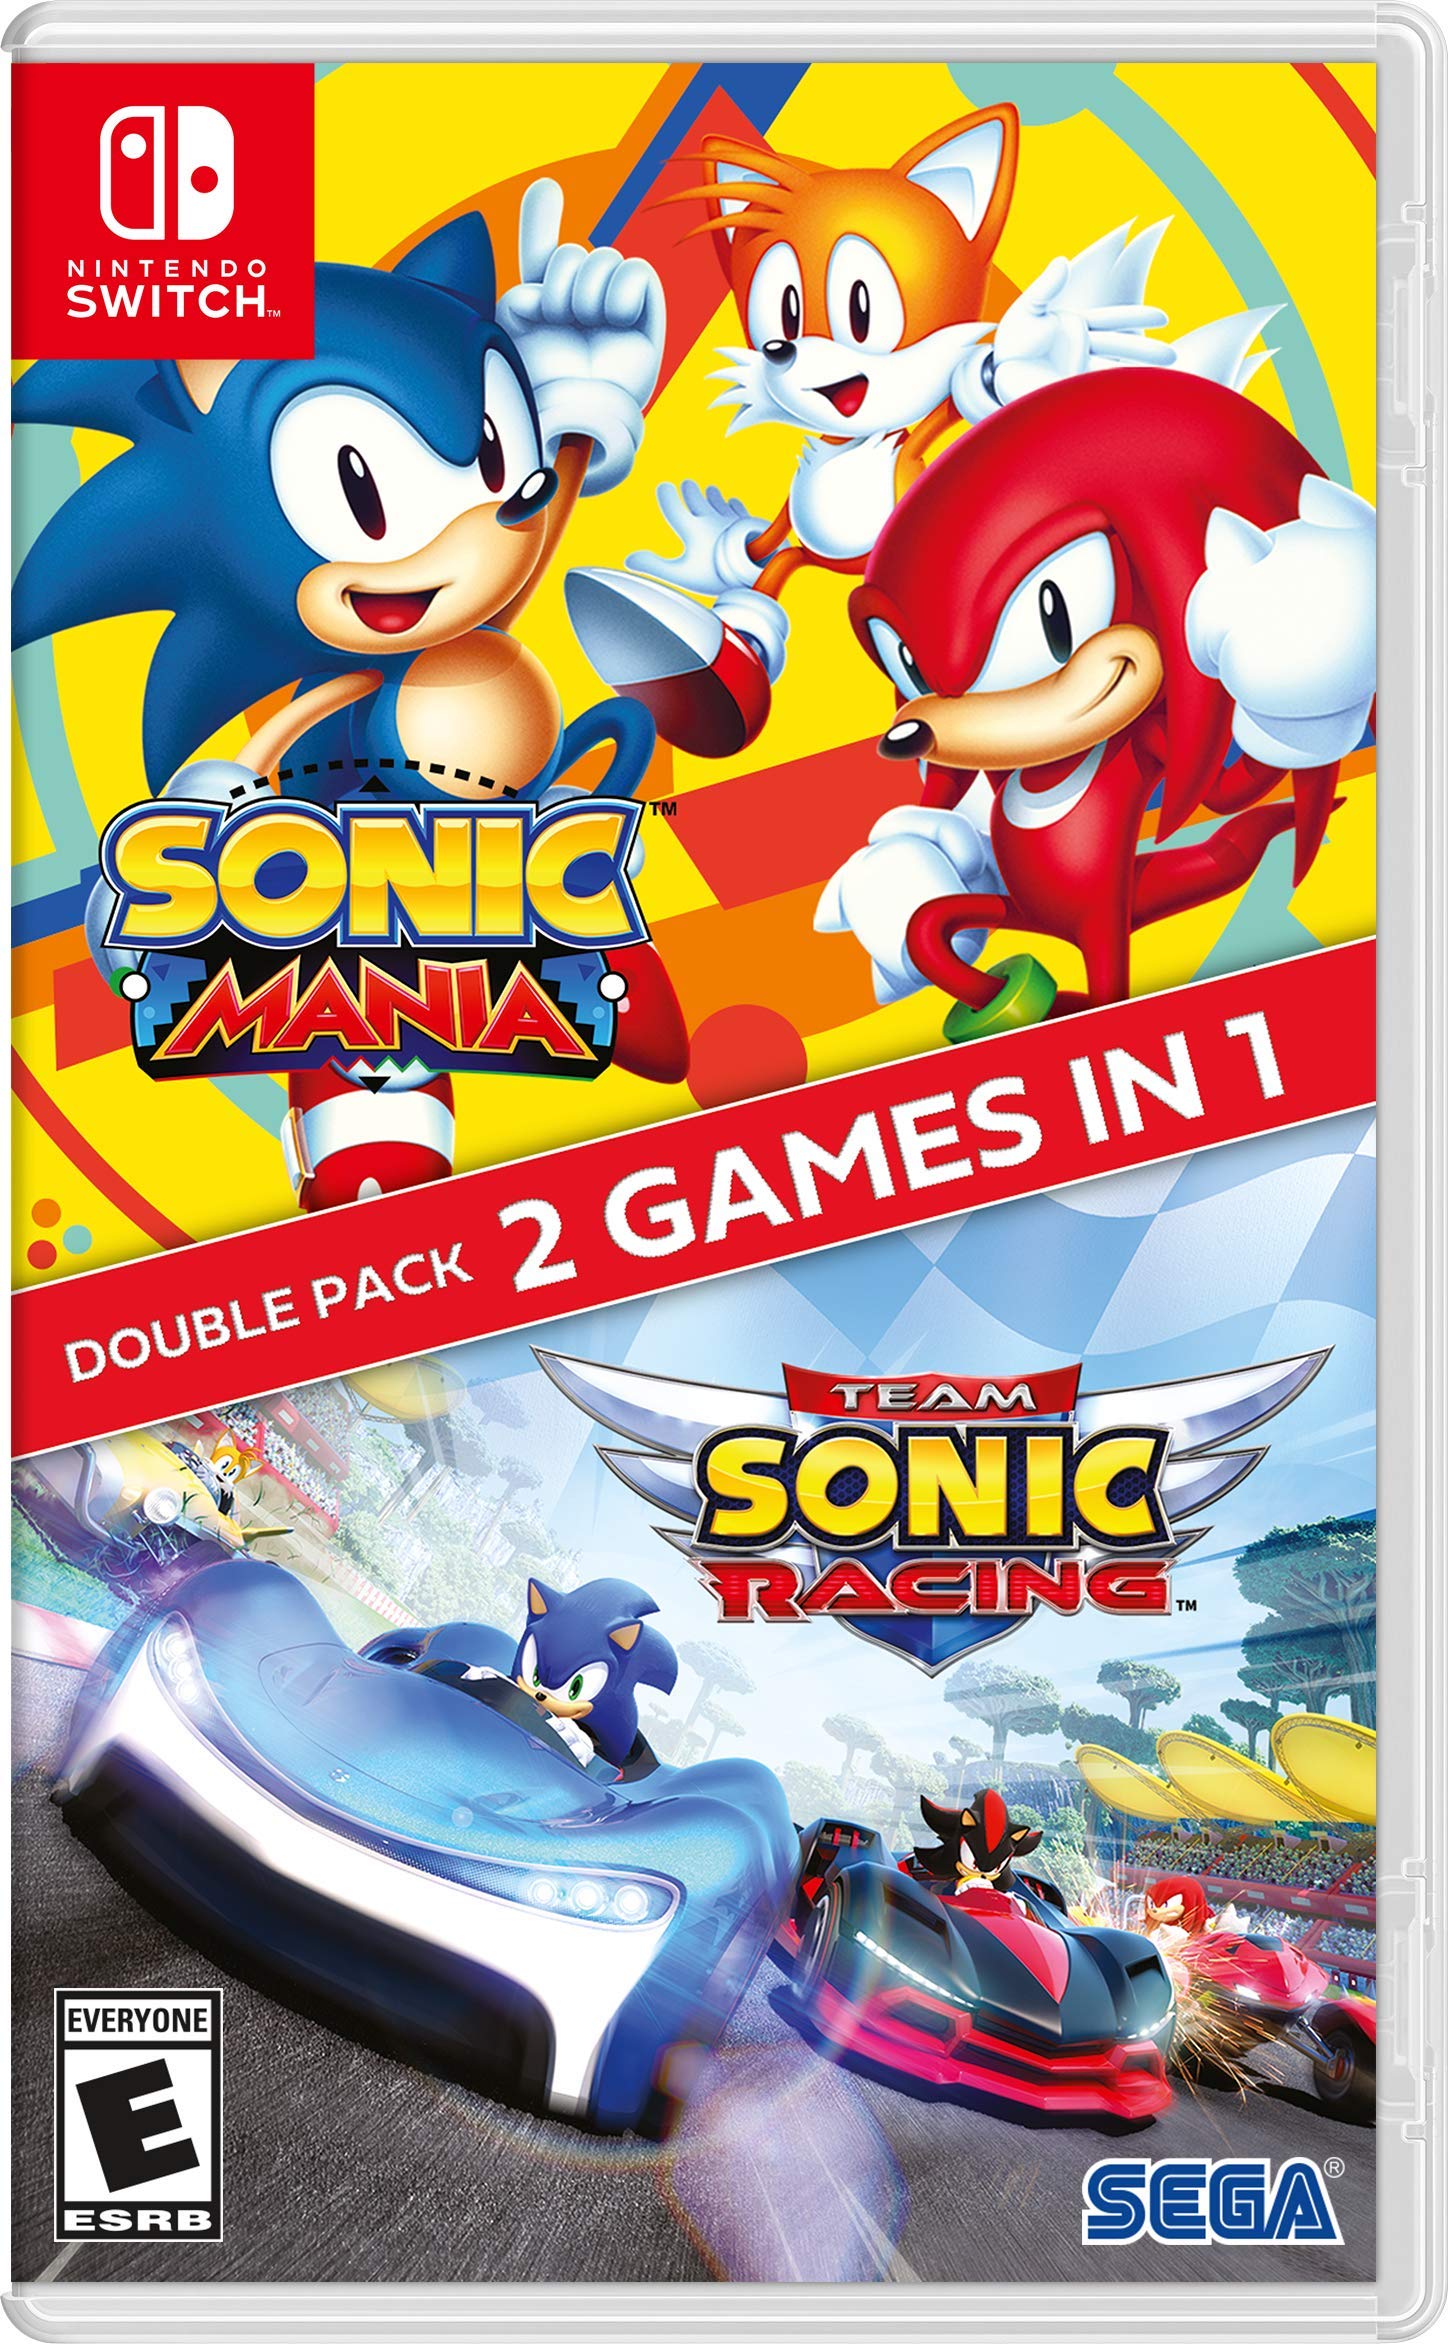 Sonic Mania Collector's Edition (PS4) - Tokyo Otaku Mode (TOM)